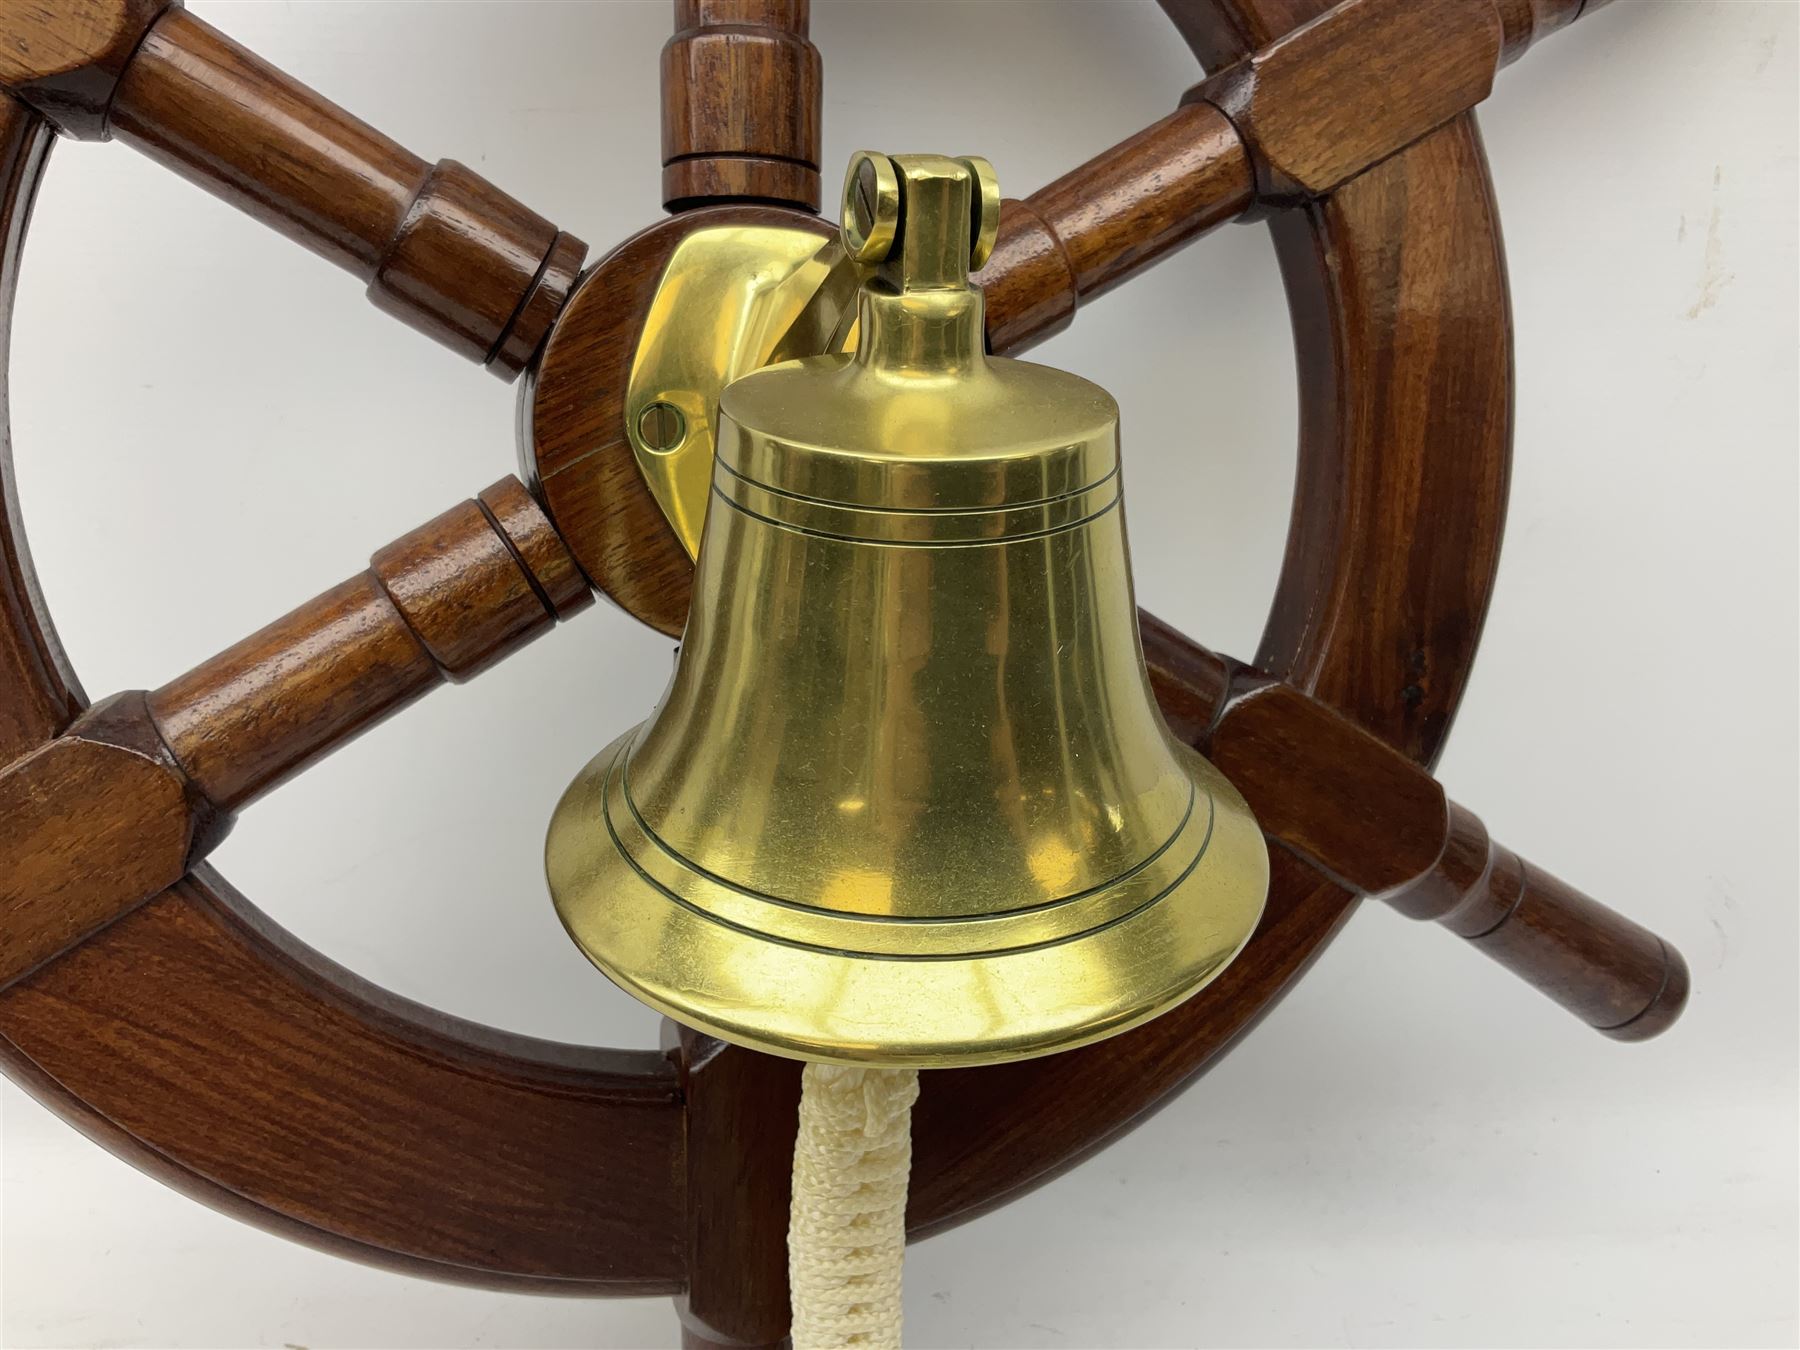 Modern six spoke ships wheel with brass bell - Image 2 of 8